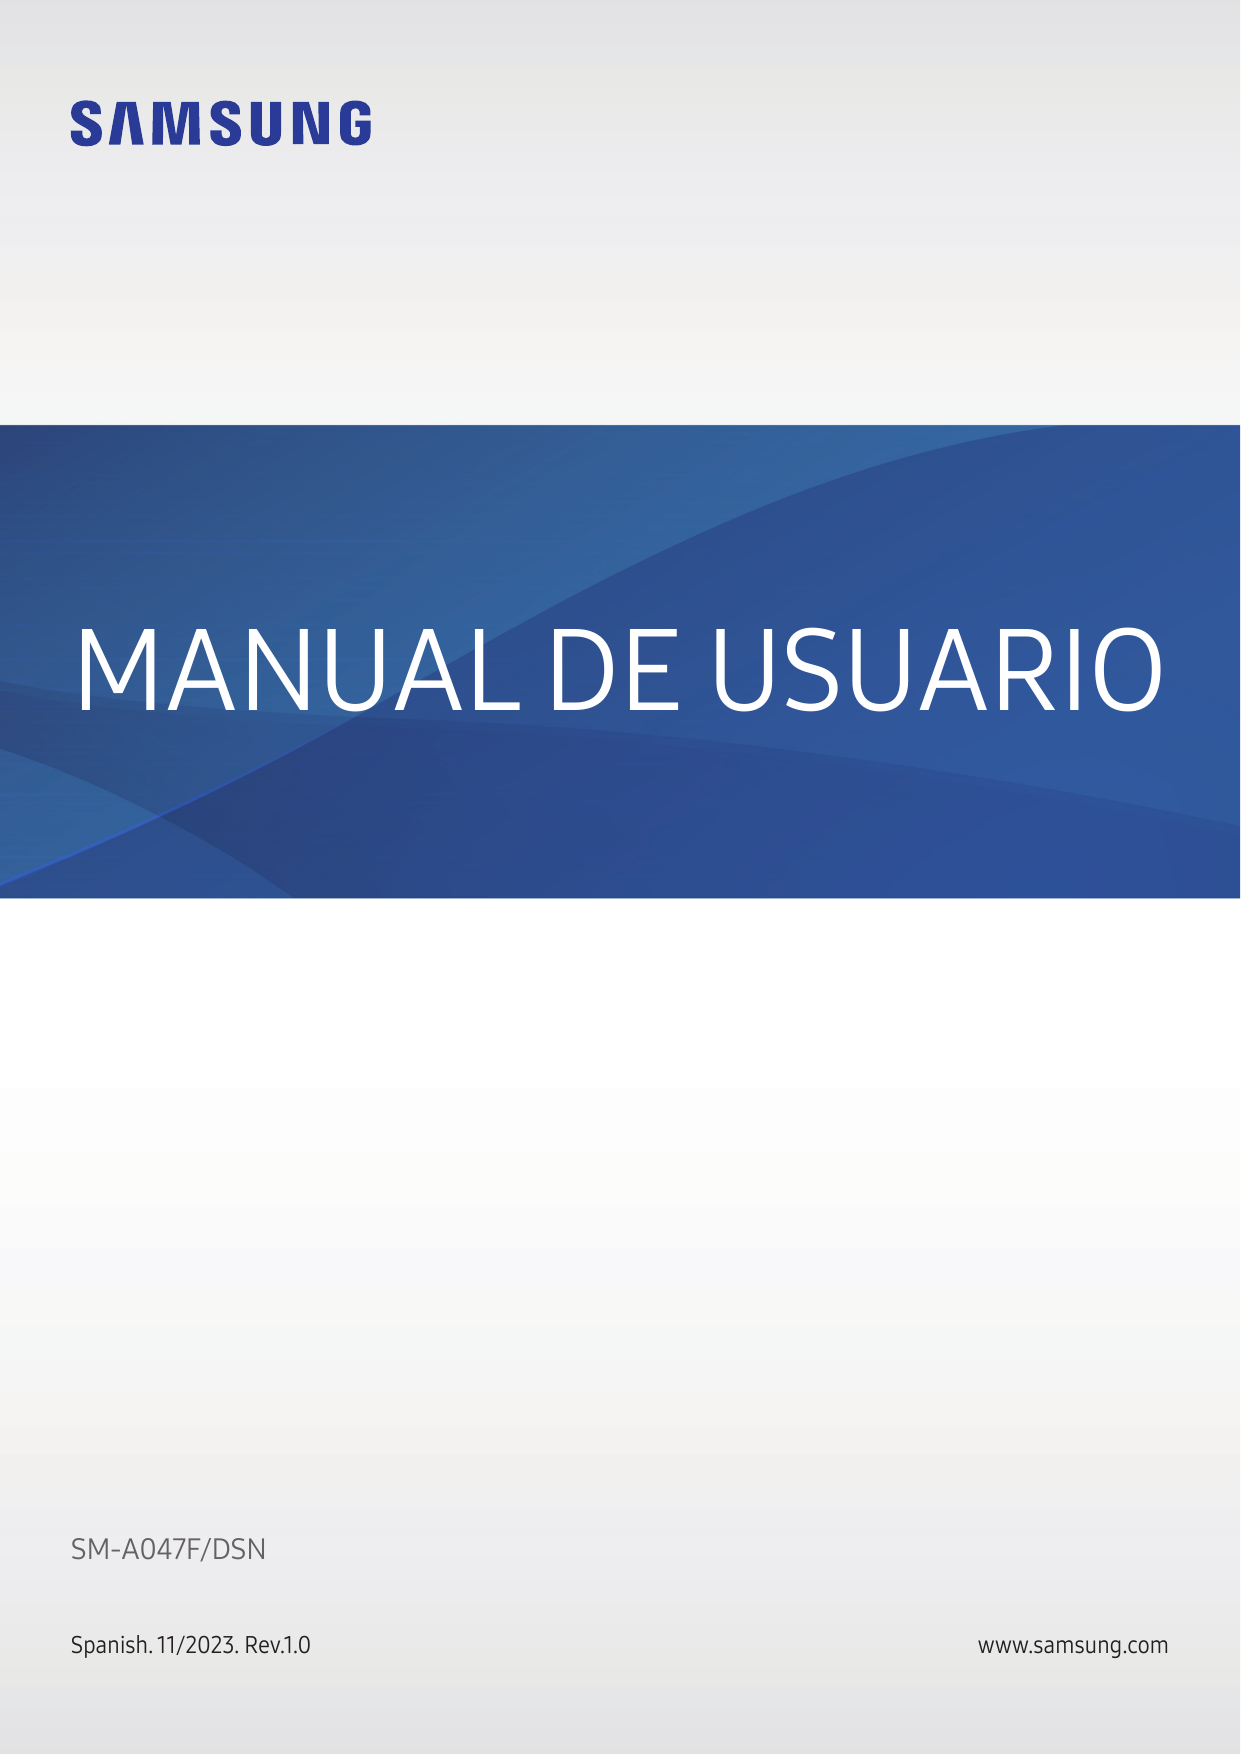 MANUAL DE USUARIOSM-A047F/DSNSpanish. 11/2023. Rev.1.0www.samsung.com